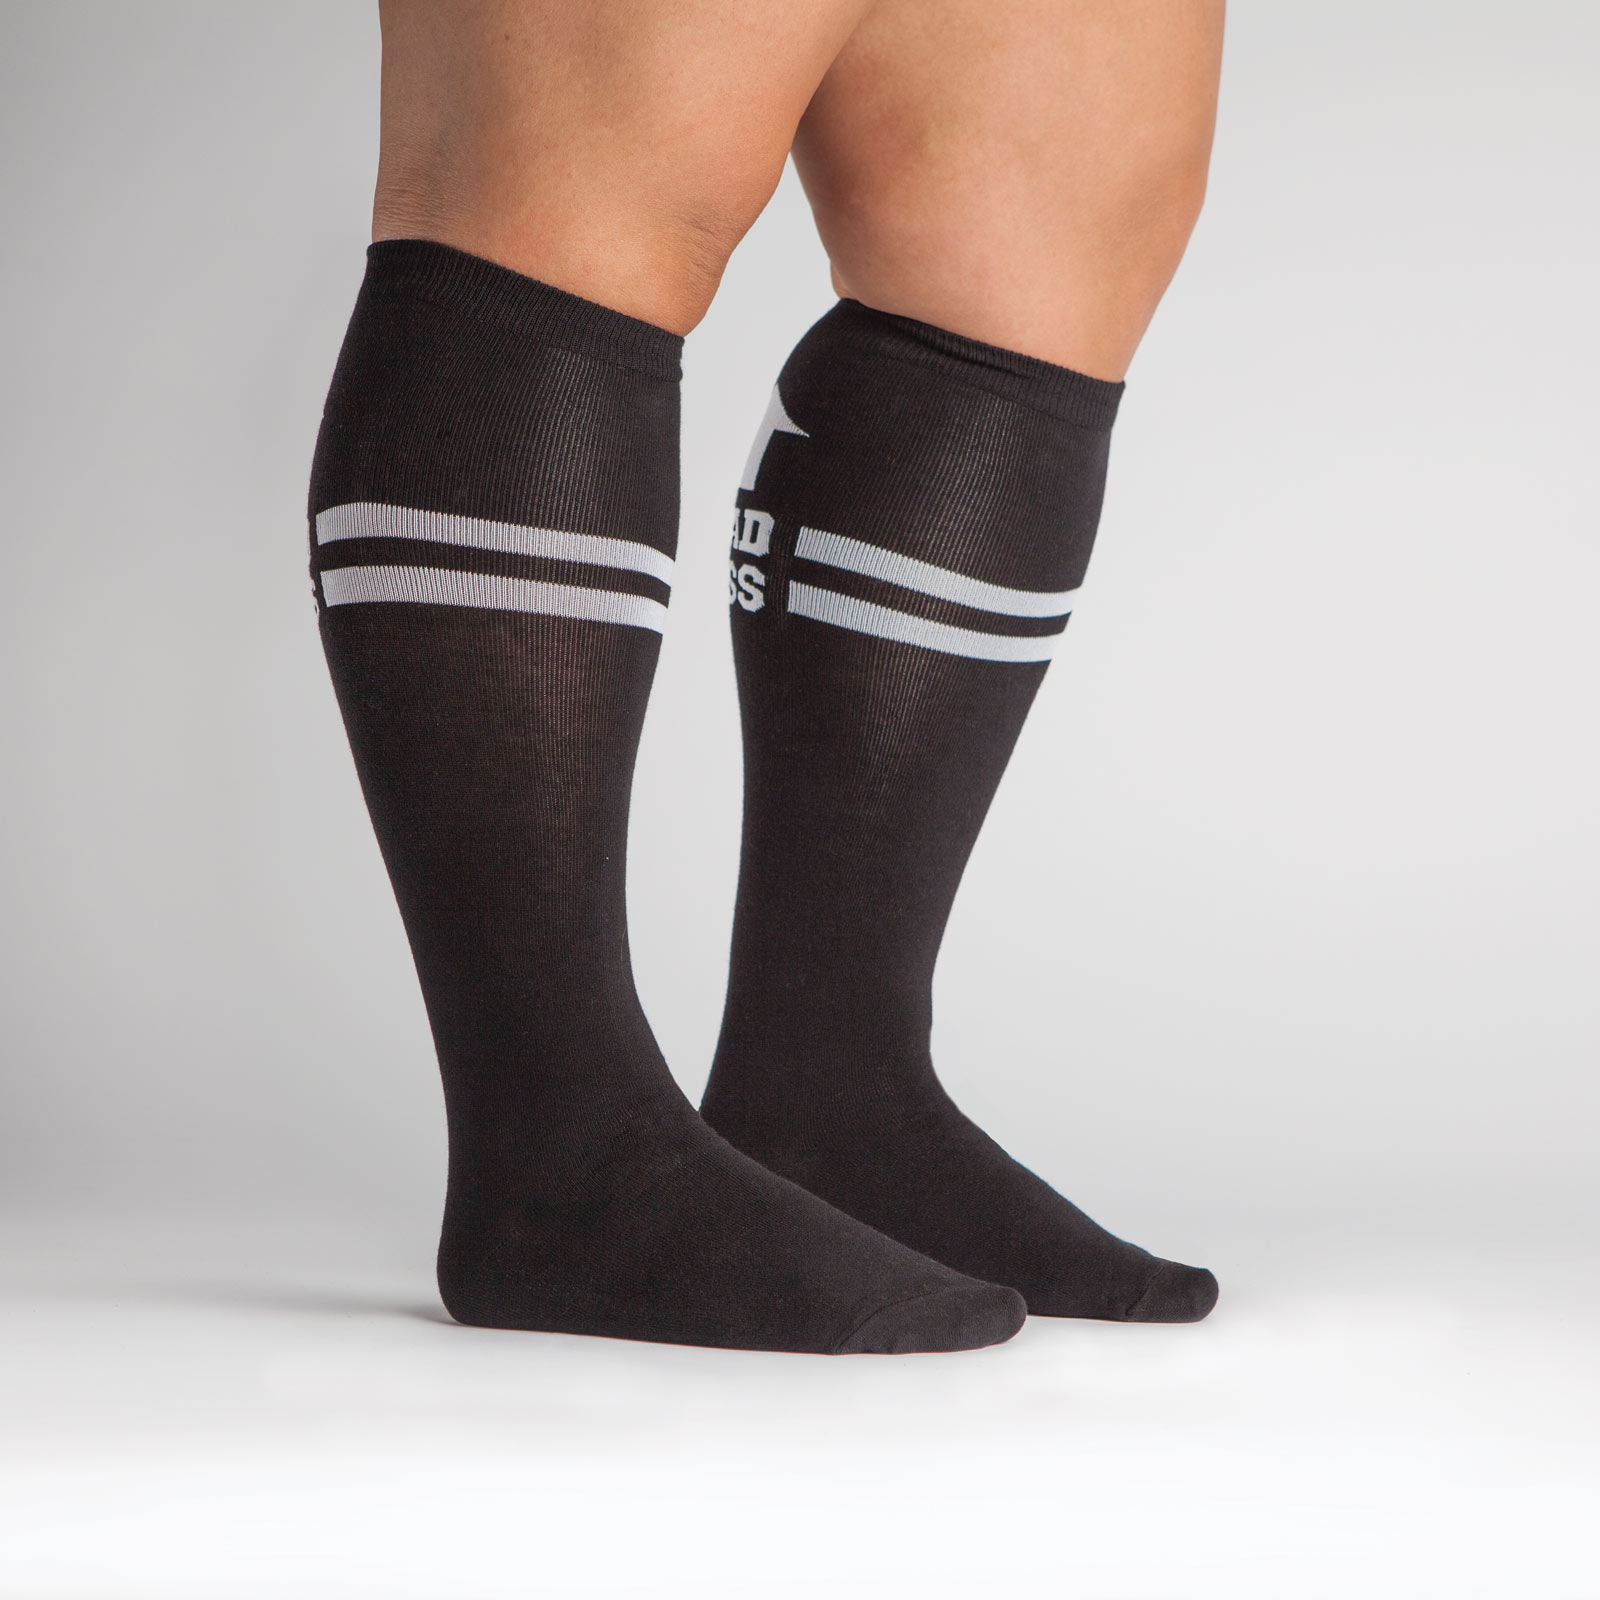 Wide Calf Socks